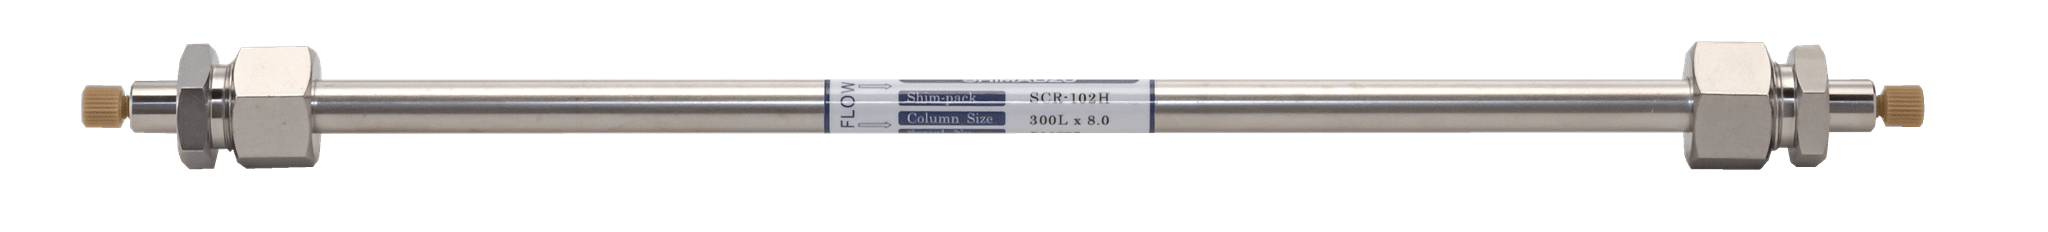 Obrázek Shim-pack SCR-102H; 300 x 8.0